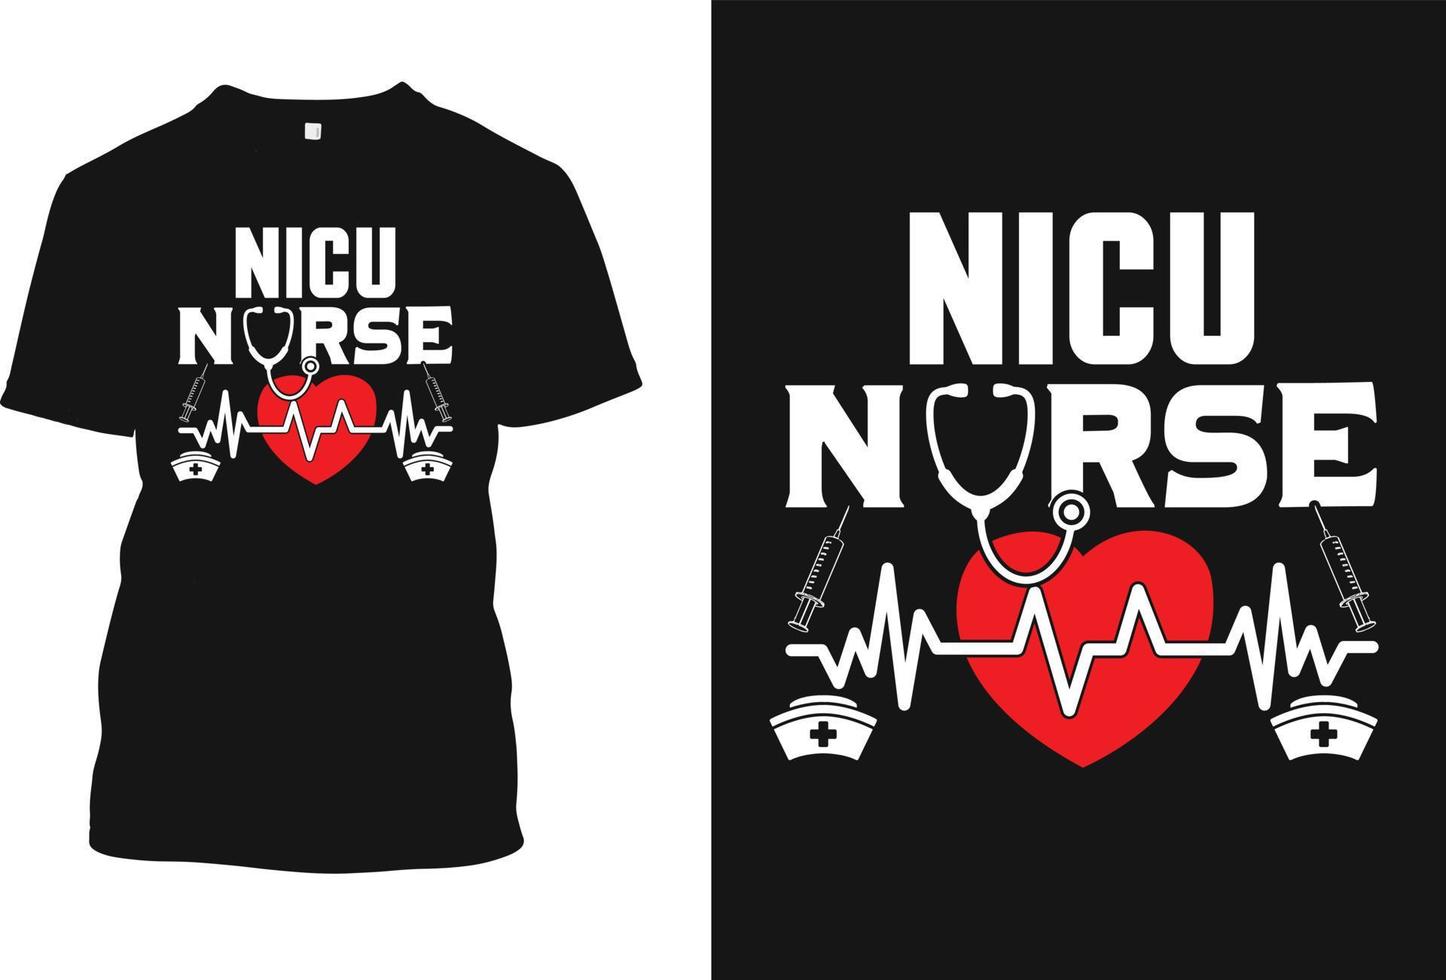 Nurse and Nicu Nurse t shirt design vector